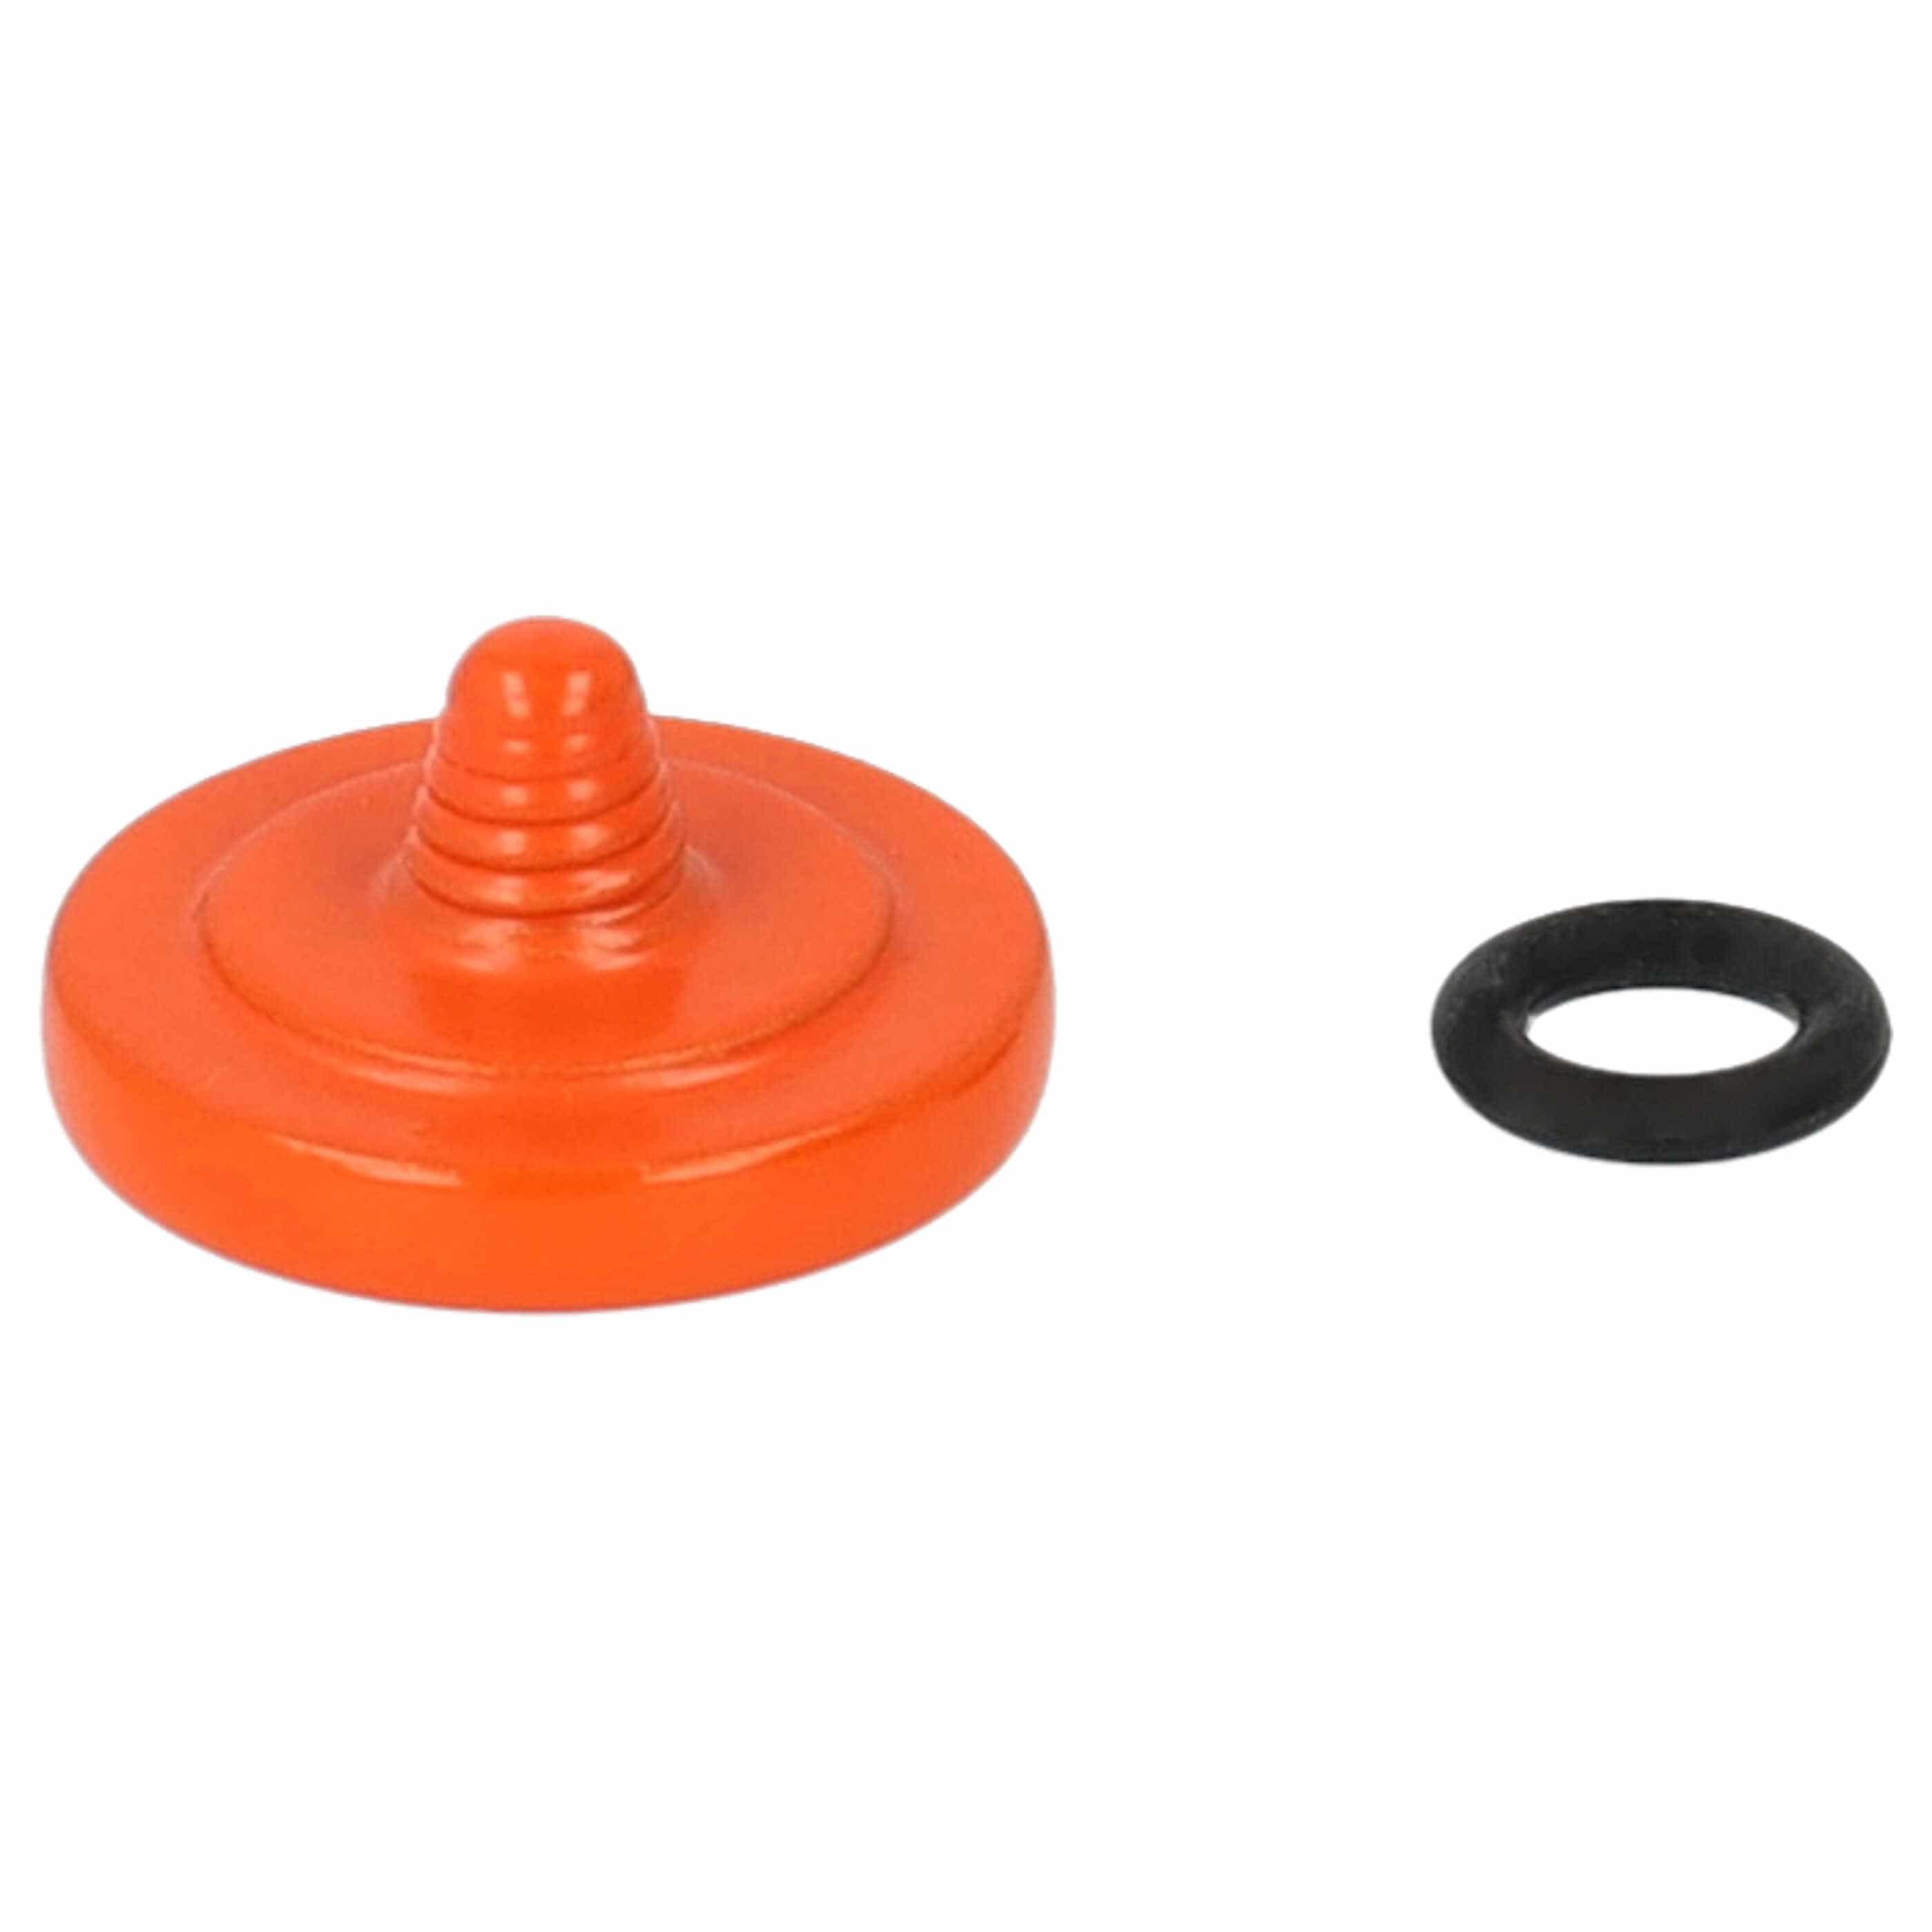 Release Button suitable for X-E1 FujifilmCamera etc. - Metal, Orange